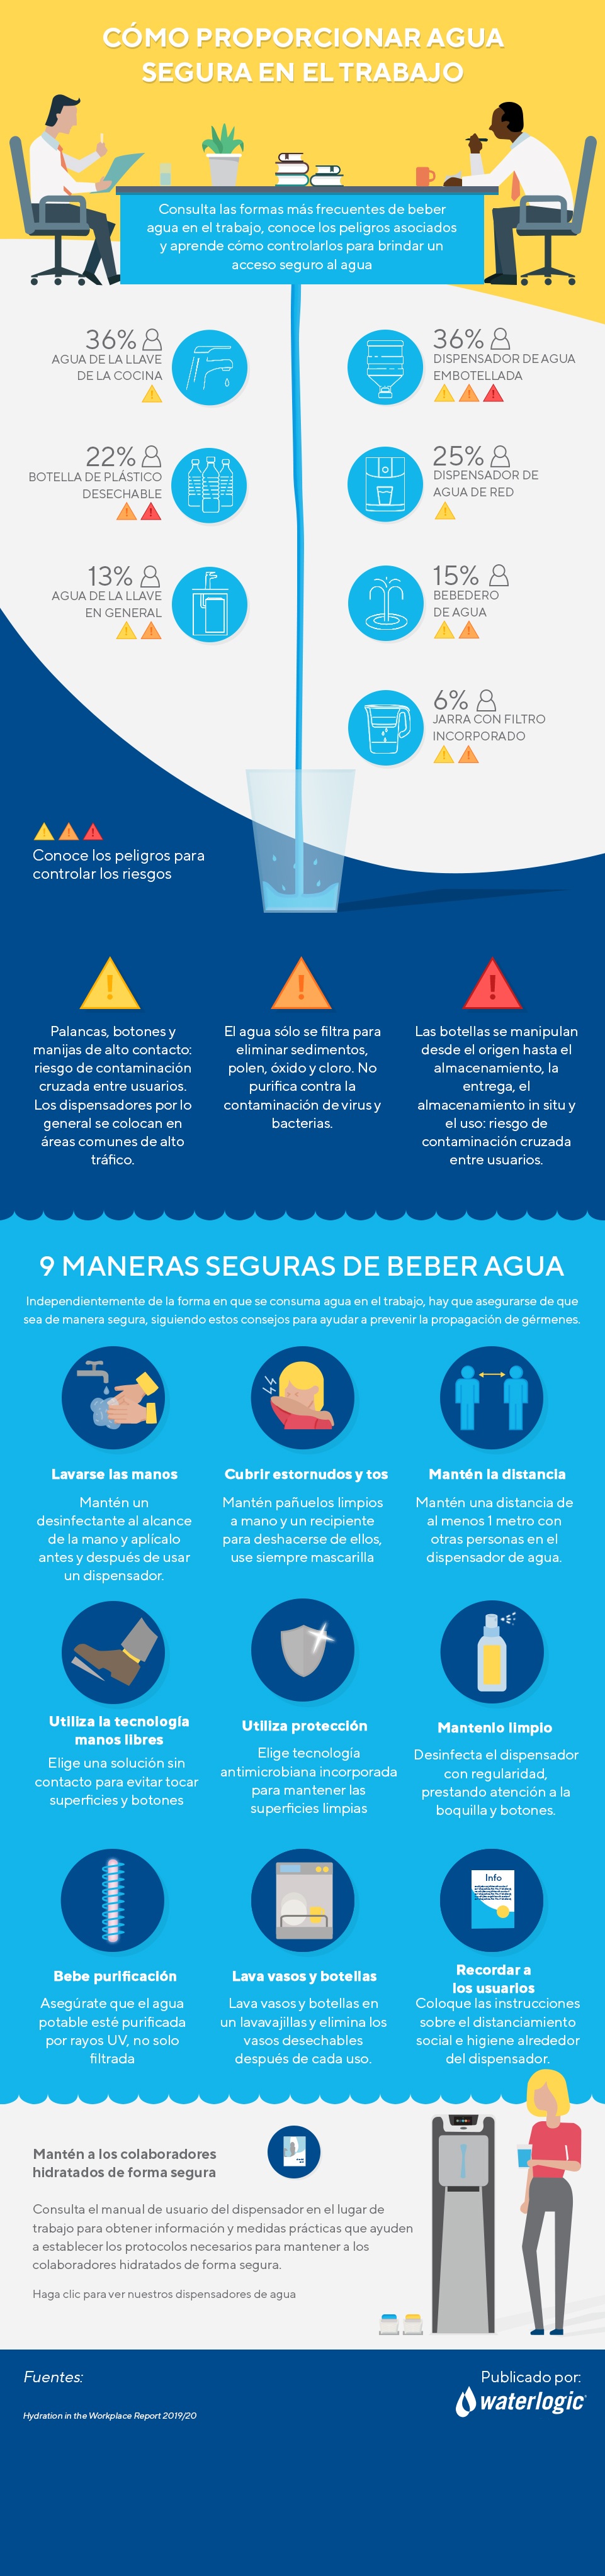 9 formas seguras de beber agua